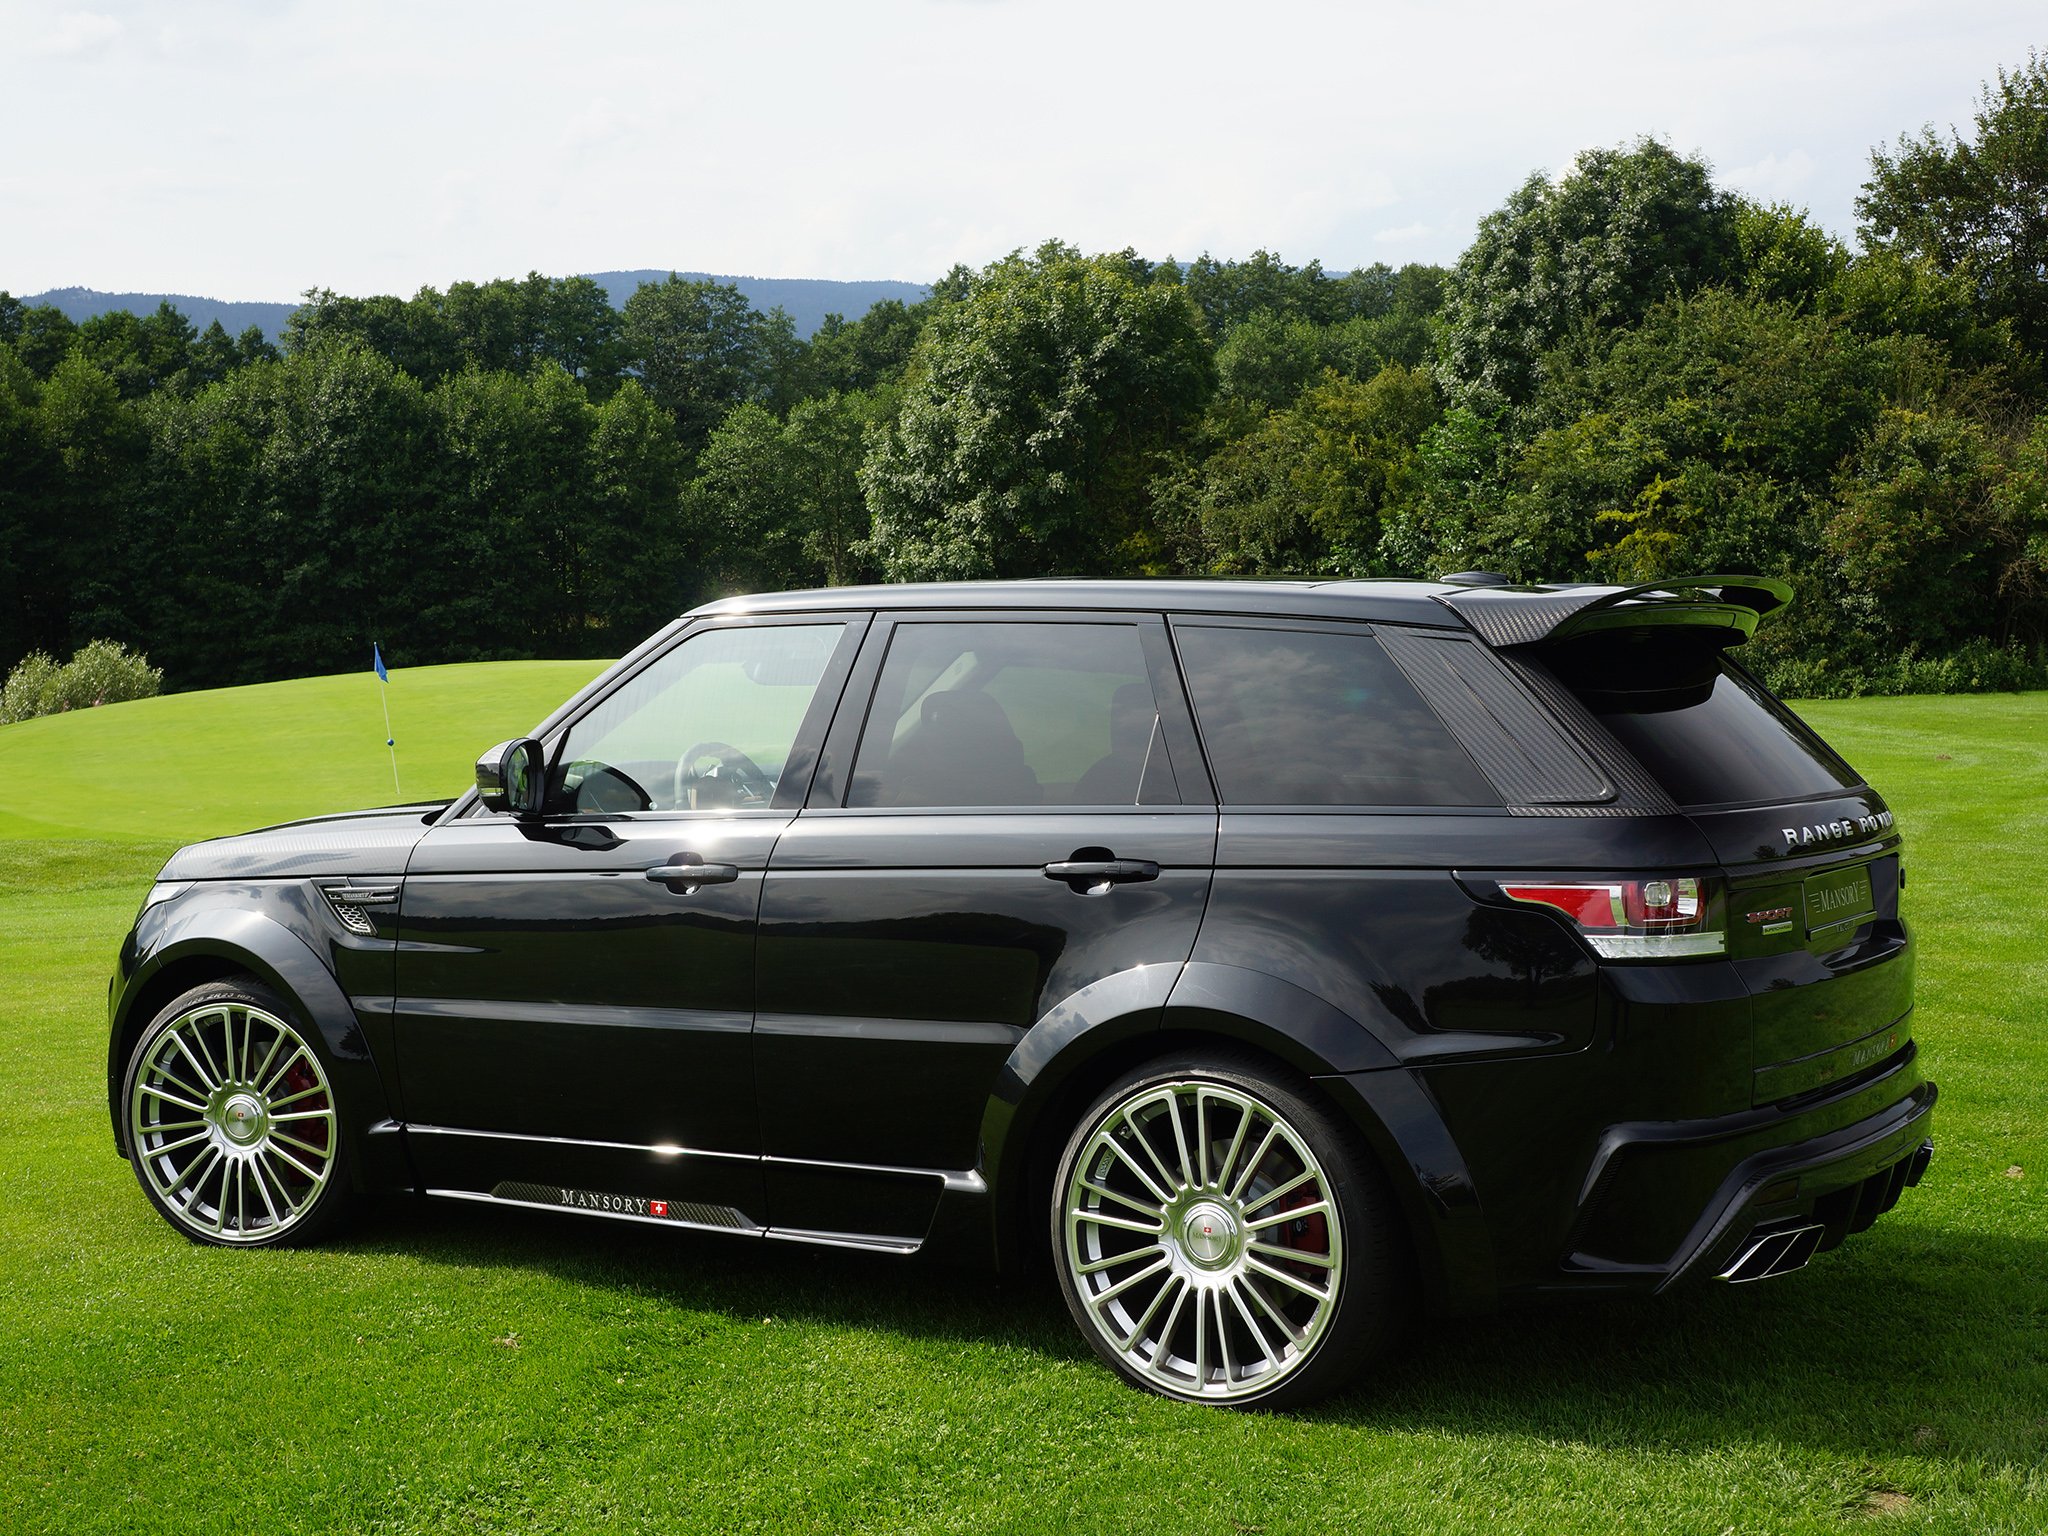 2014, Mansory, Range, Rover, Sport, Tuning, Luxury, Suv Wallpaper